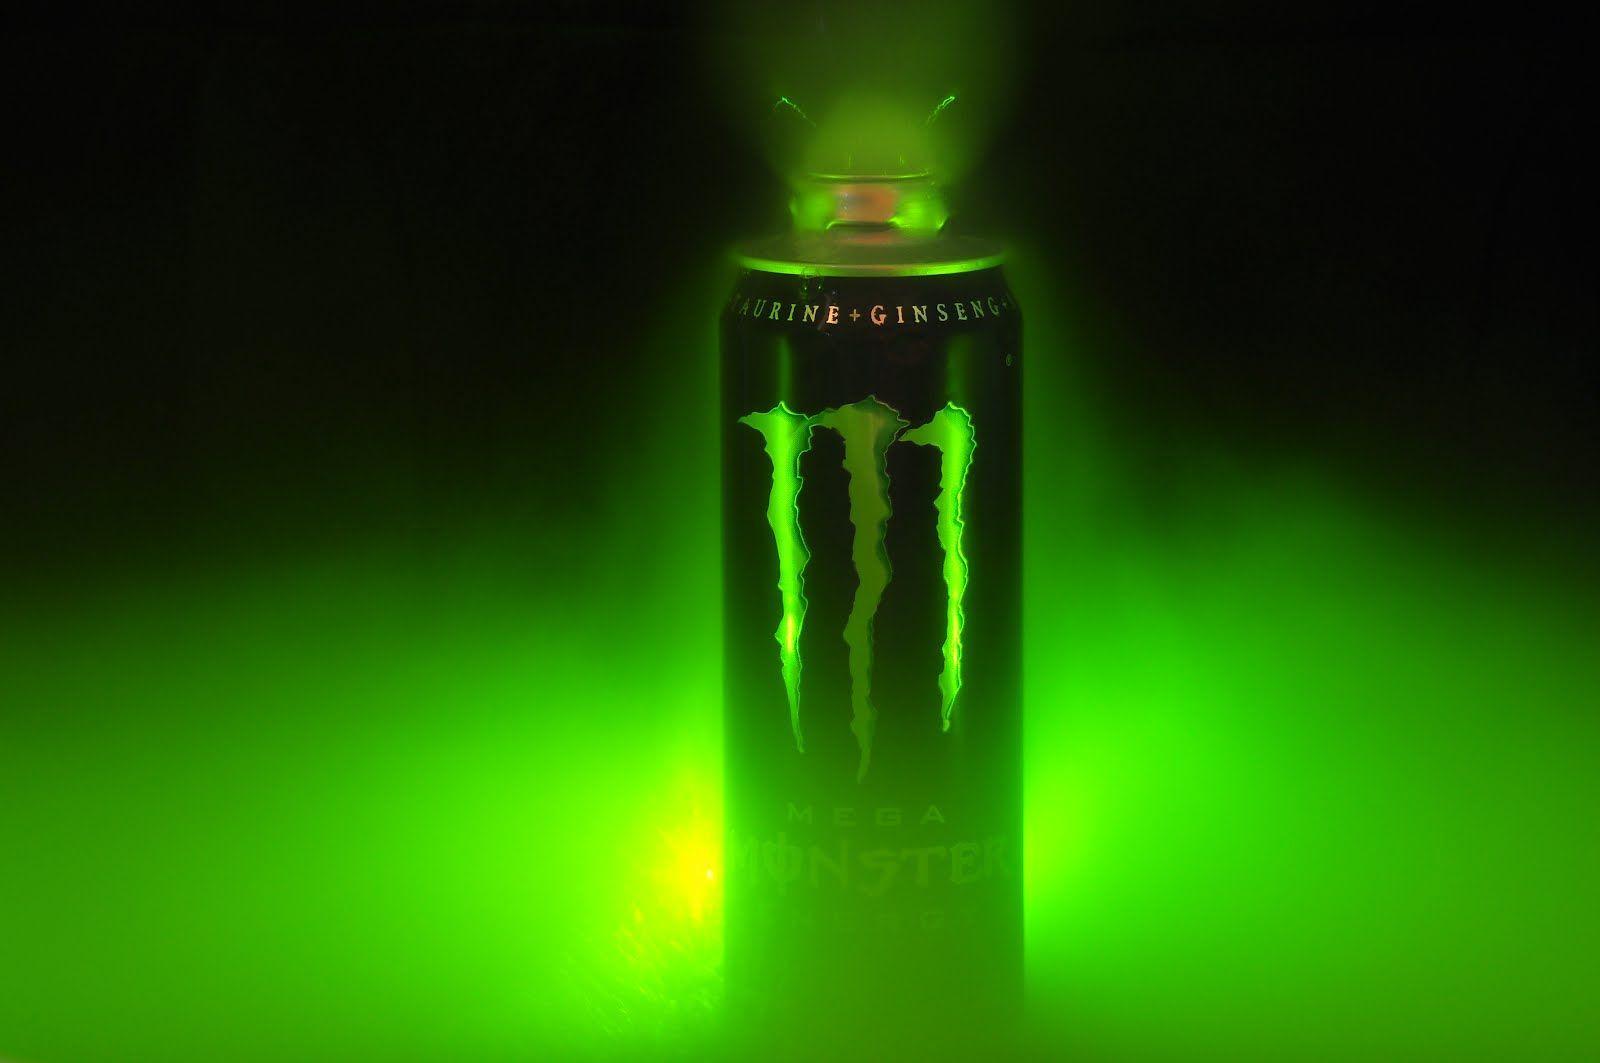 Monster Energy Drink Wallpapers Top Free Monster Energy Drink Backgrounds Wallpaperaccess